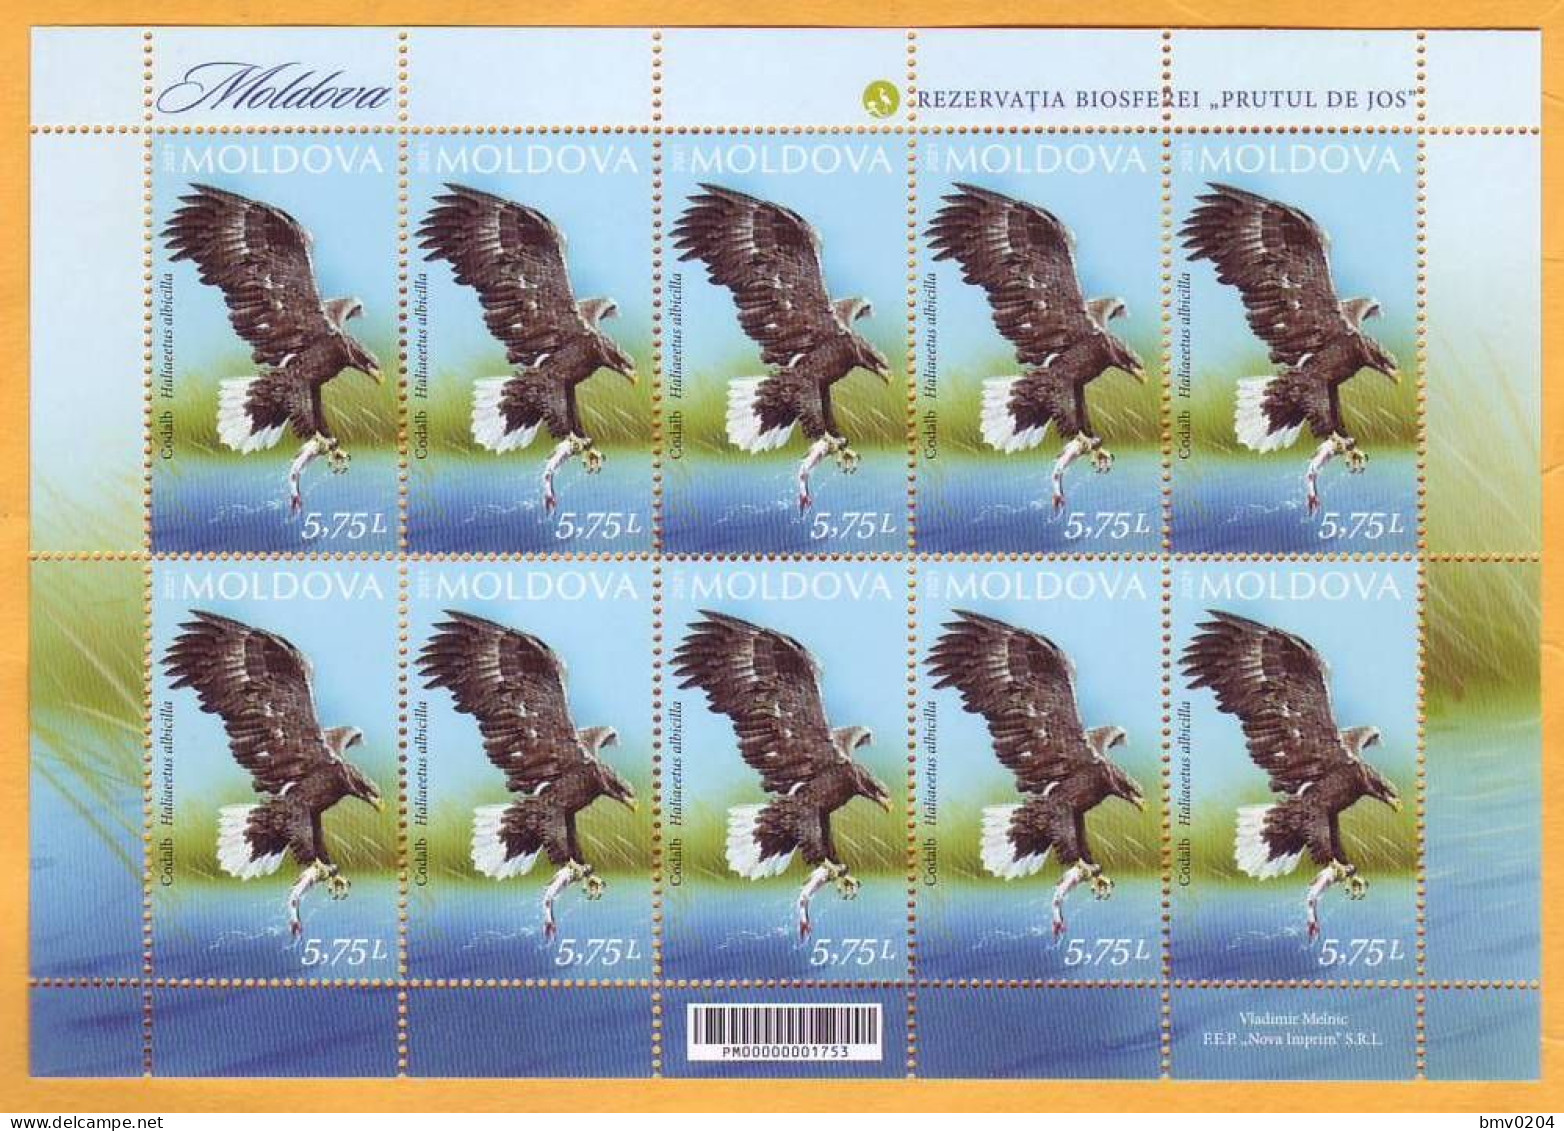 2021 Moldova Moldavie Moldau Romania  Sheet  Lower Prut ”Biosphere Reserve” Birds, Fauna Mint 5.75 - Moldova